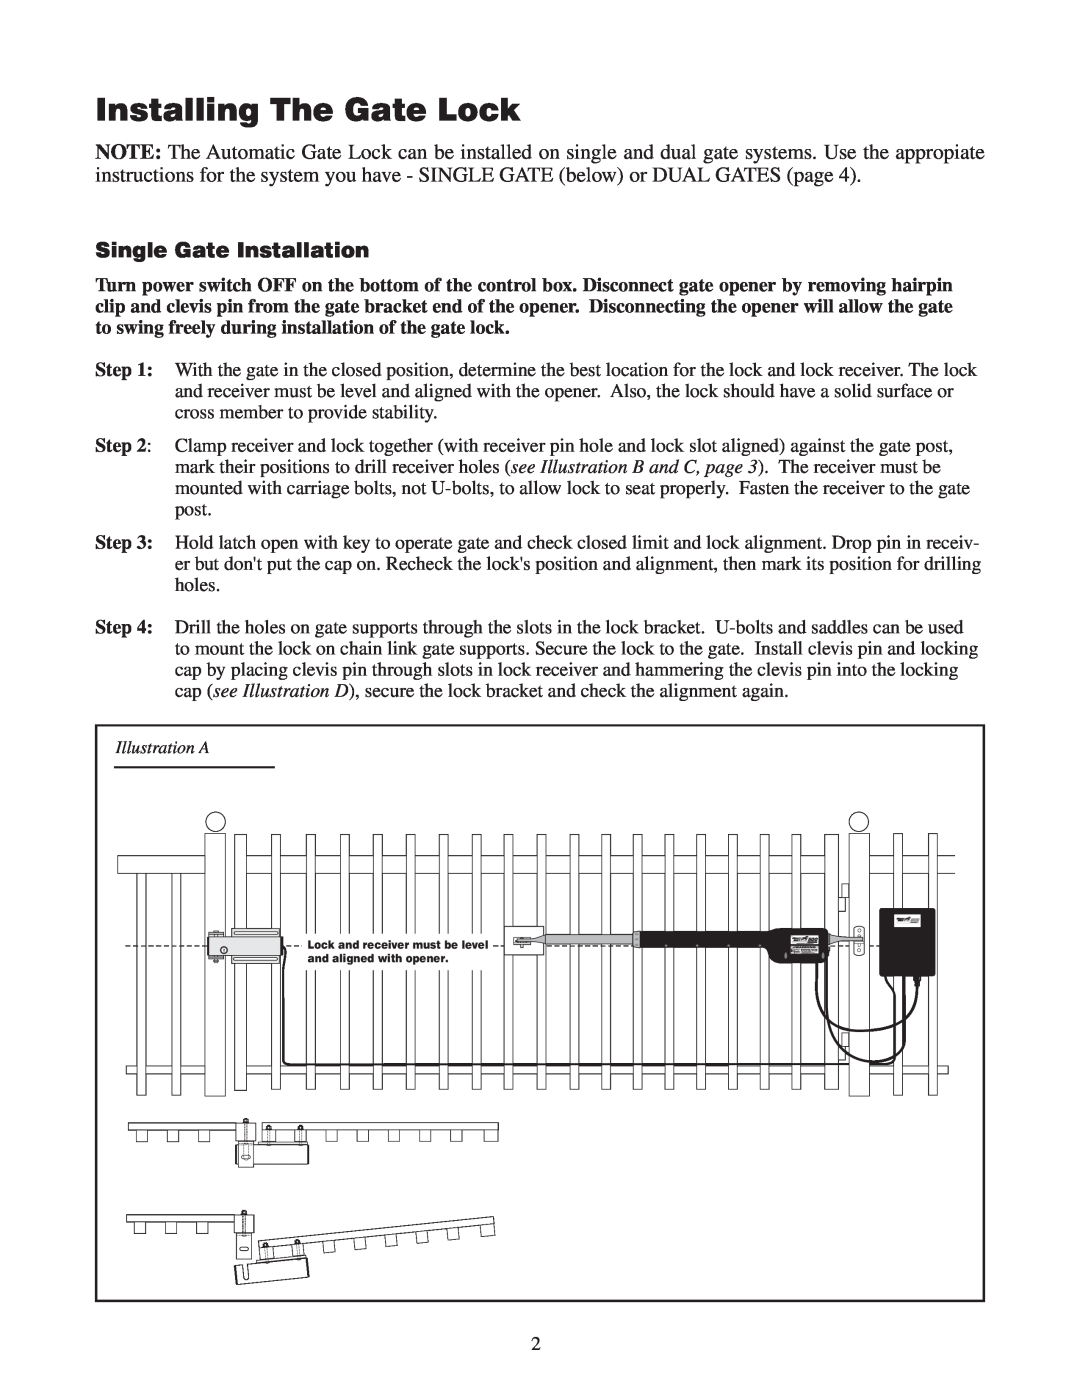 GTO RB909 installation manual Installing The Gate Lock, Single Gate Installation 